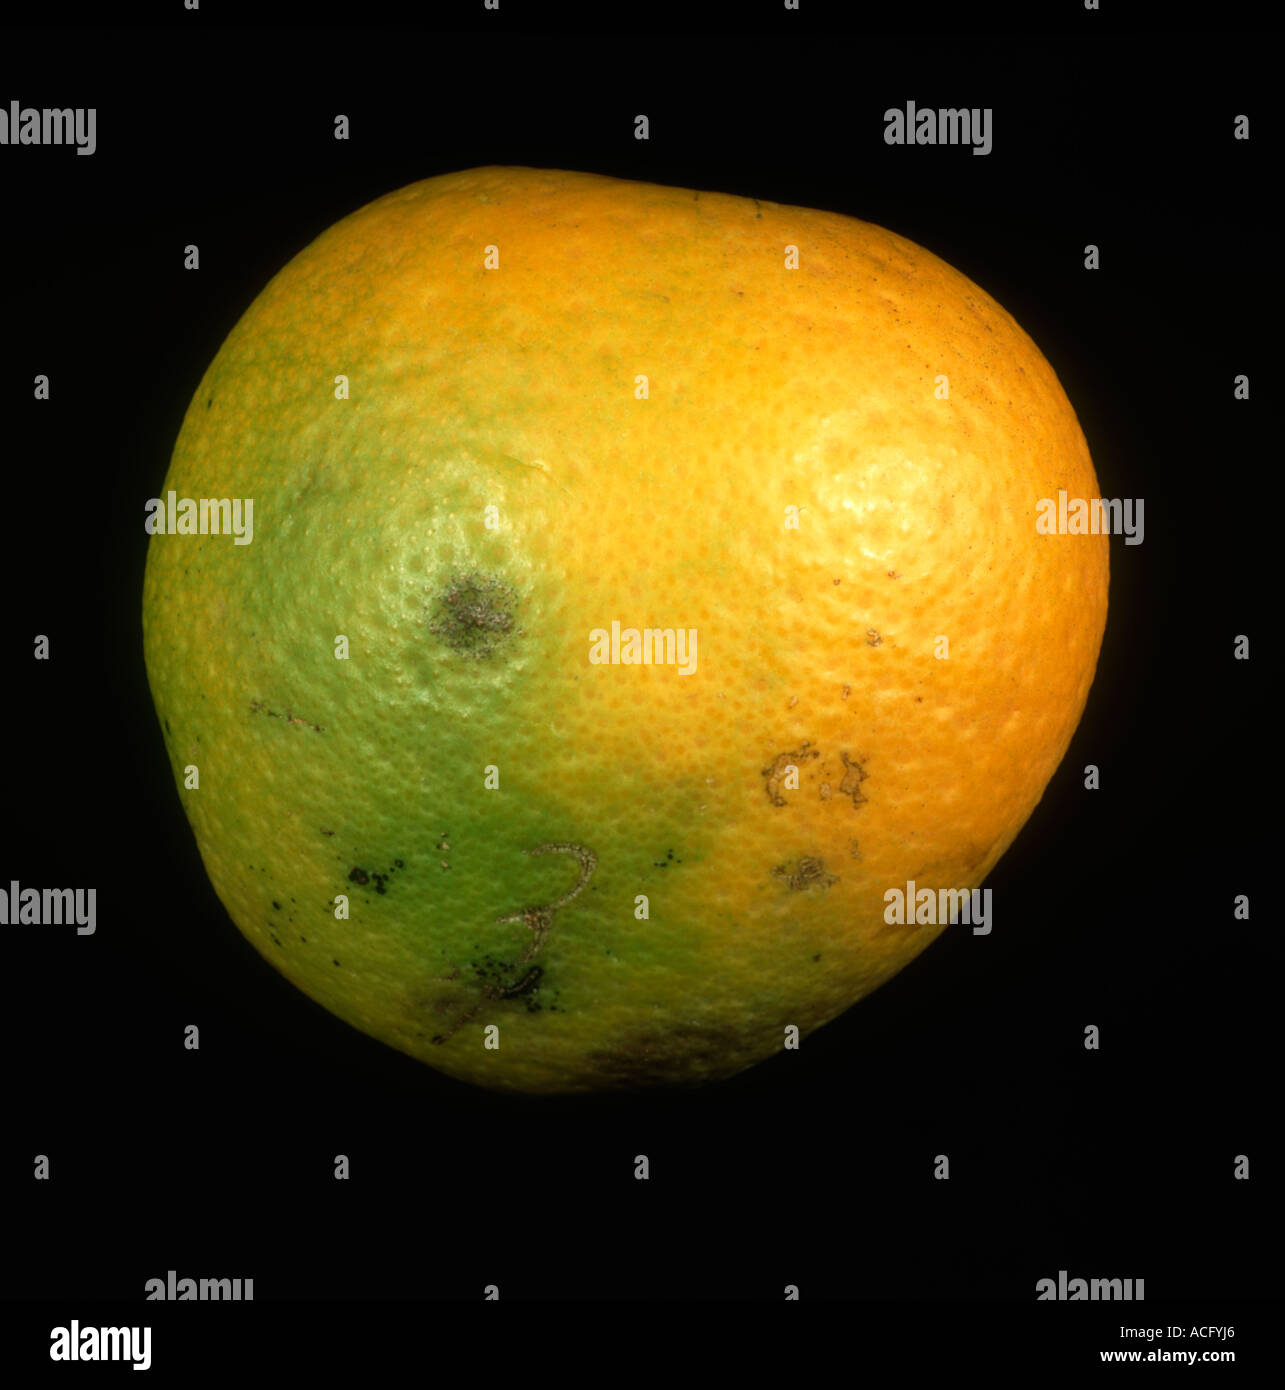 Citrus greening Candidatus Liberibacter spp.) causing greening and uneven fruit colour on an orange Stock Photo